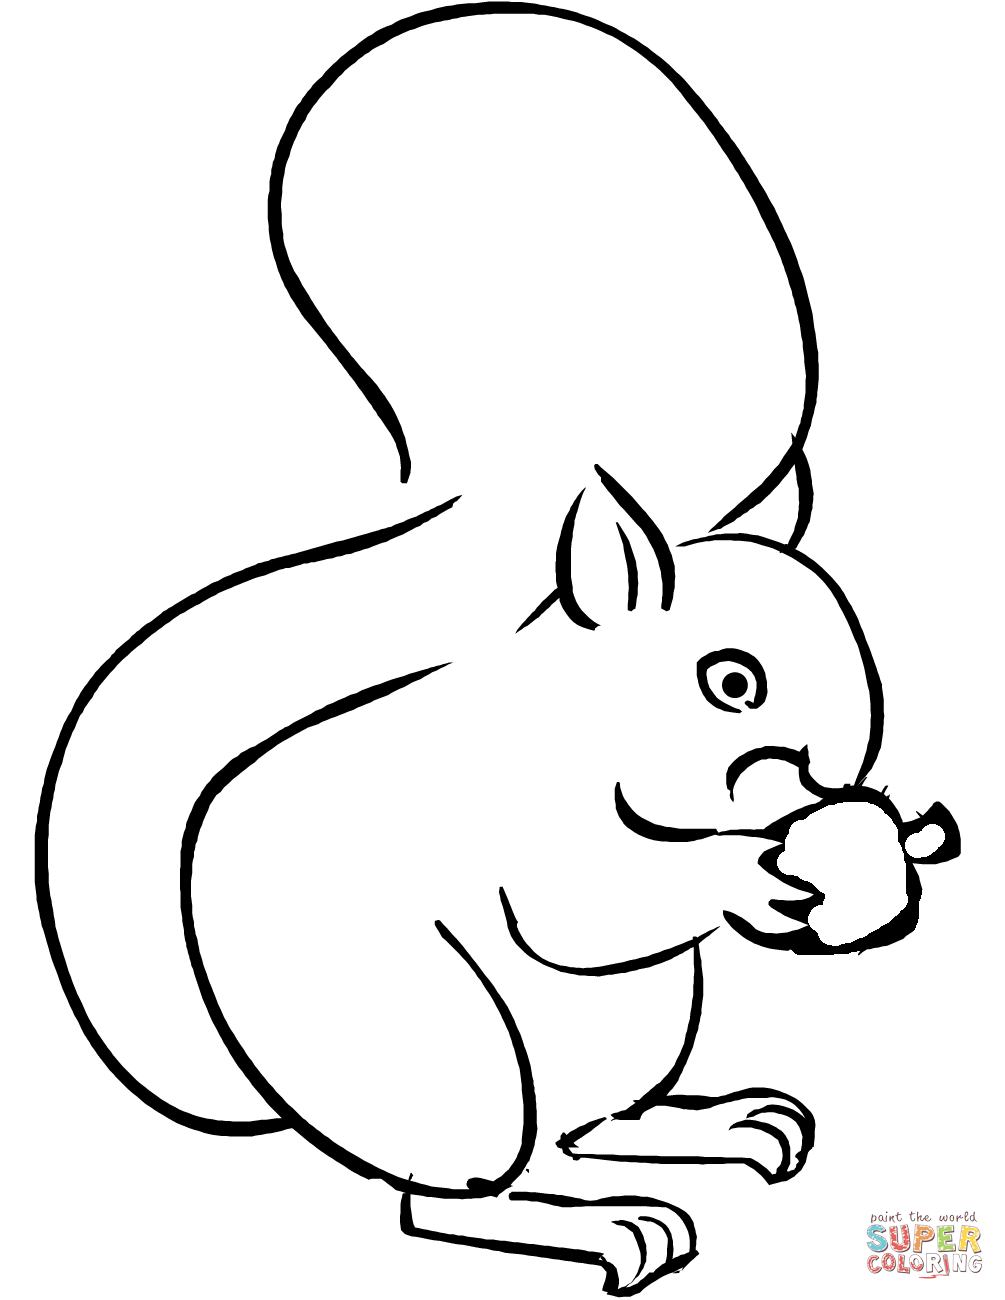 Cartoon Squirrel with Acorn coloring page | Free Printable ...